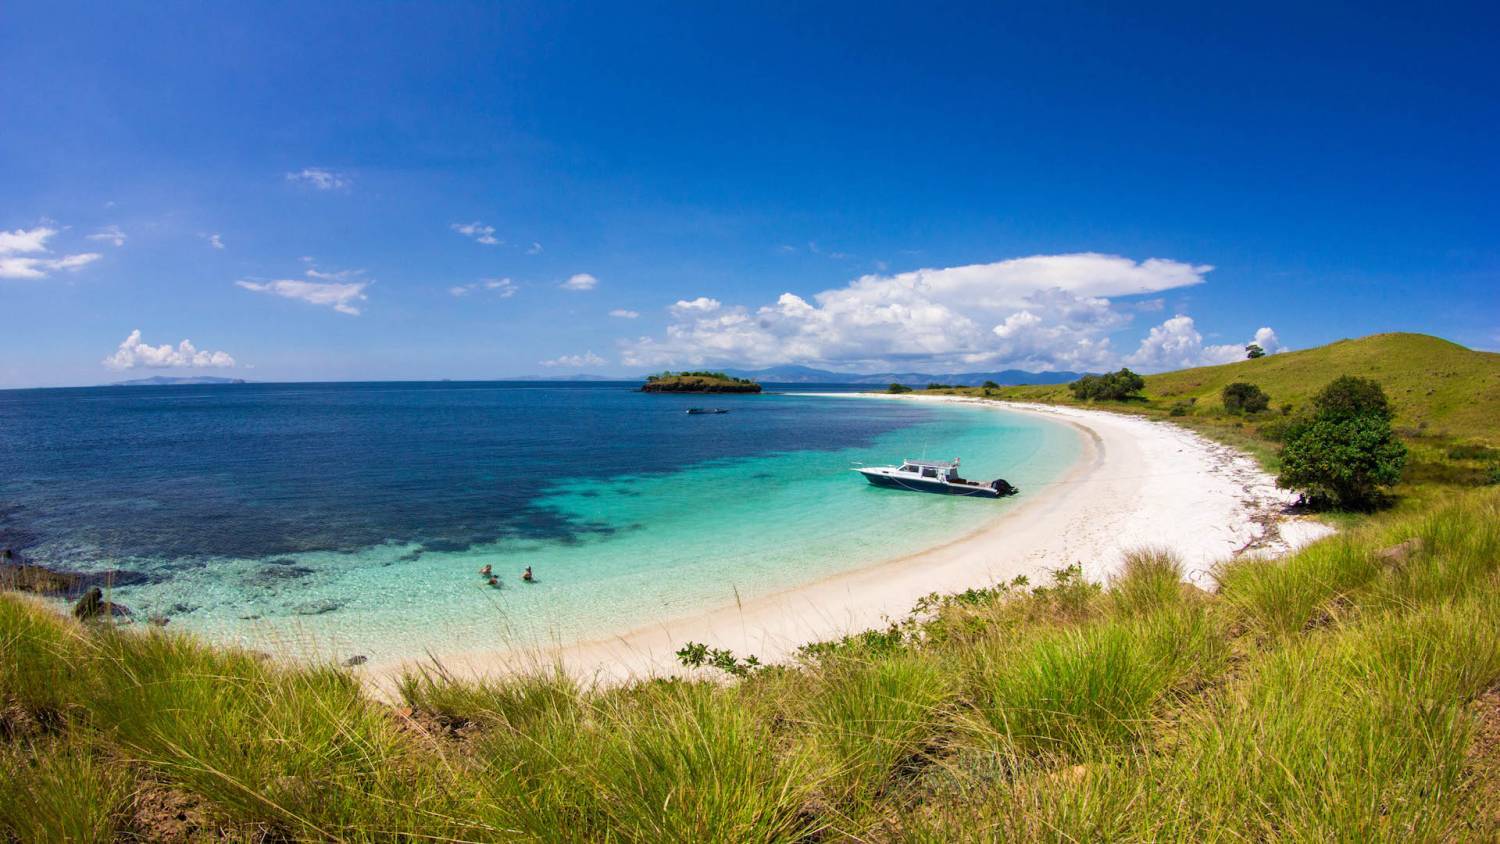 【Indonesia】Kalimaya Dive Resort  6 days 5 nights diving package